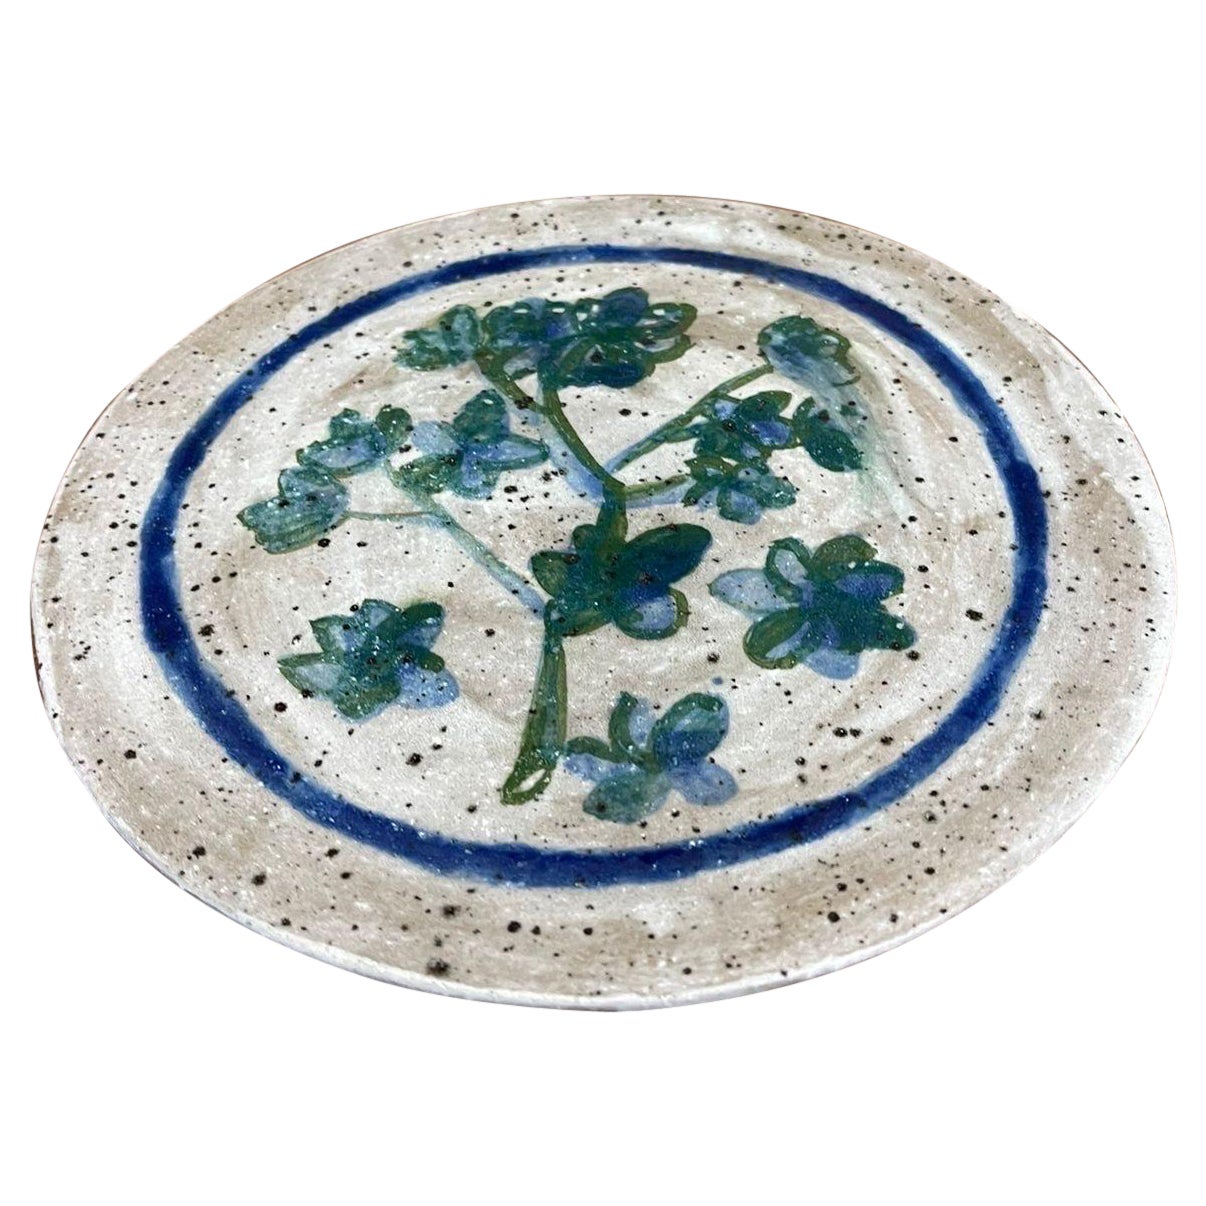 Vintage Signed Ceramic Plate With Blue Floral Motif. For Sale